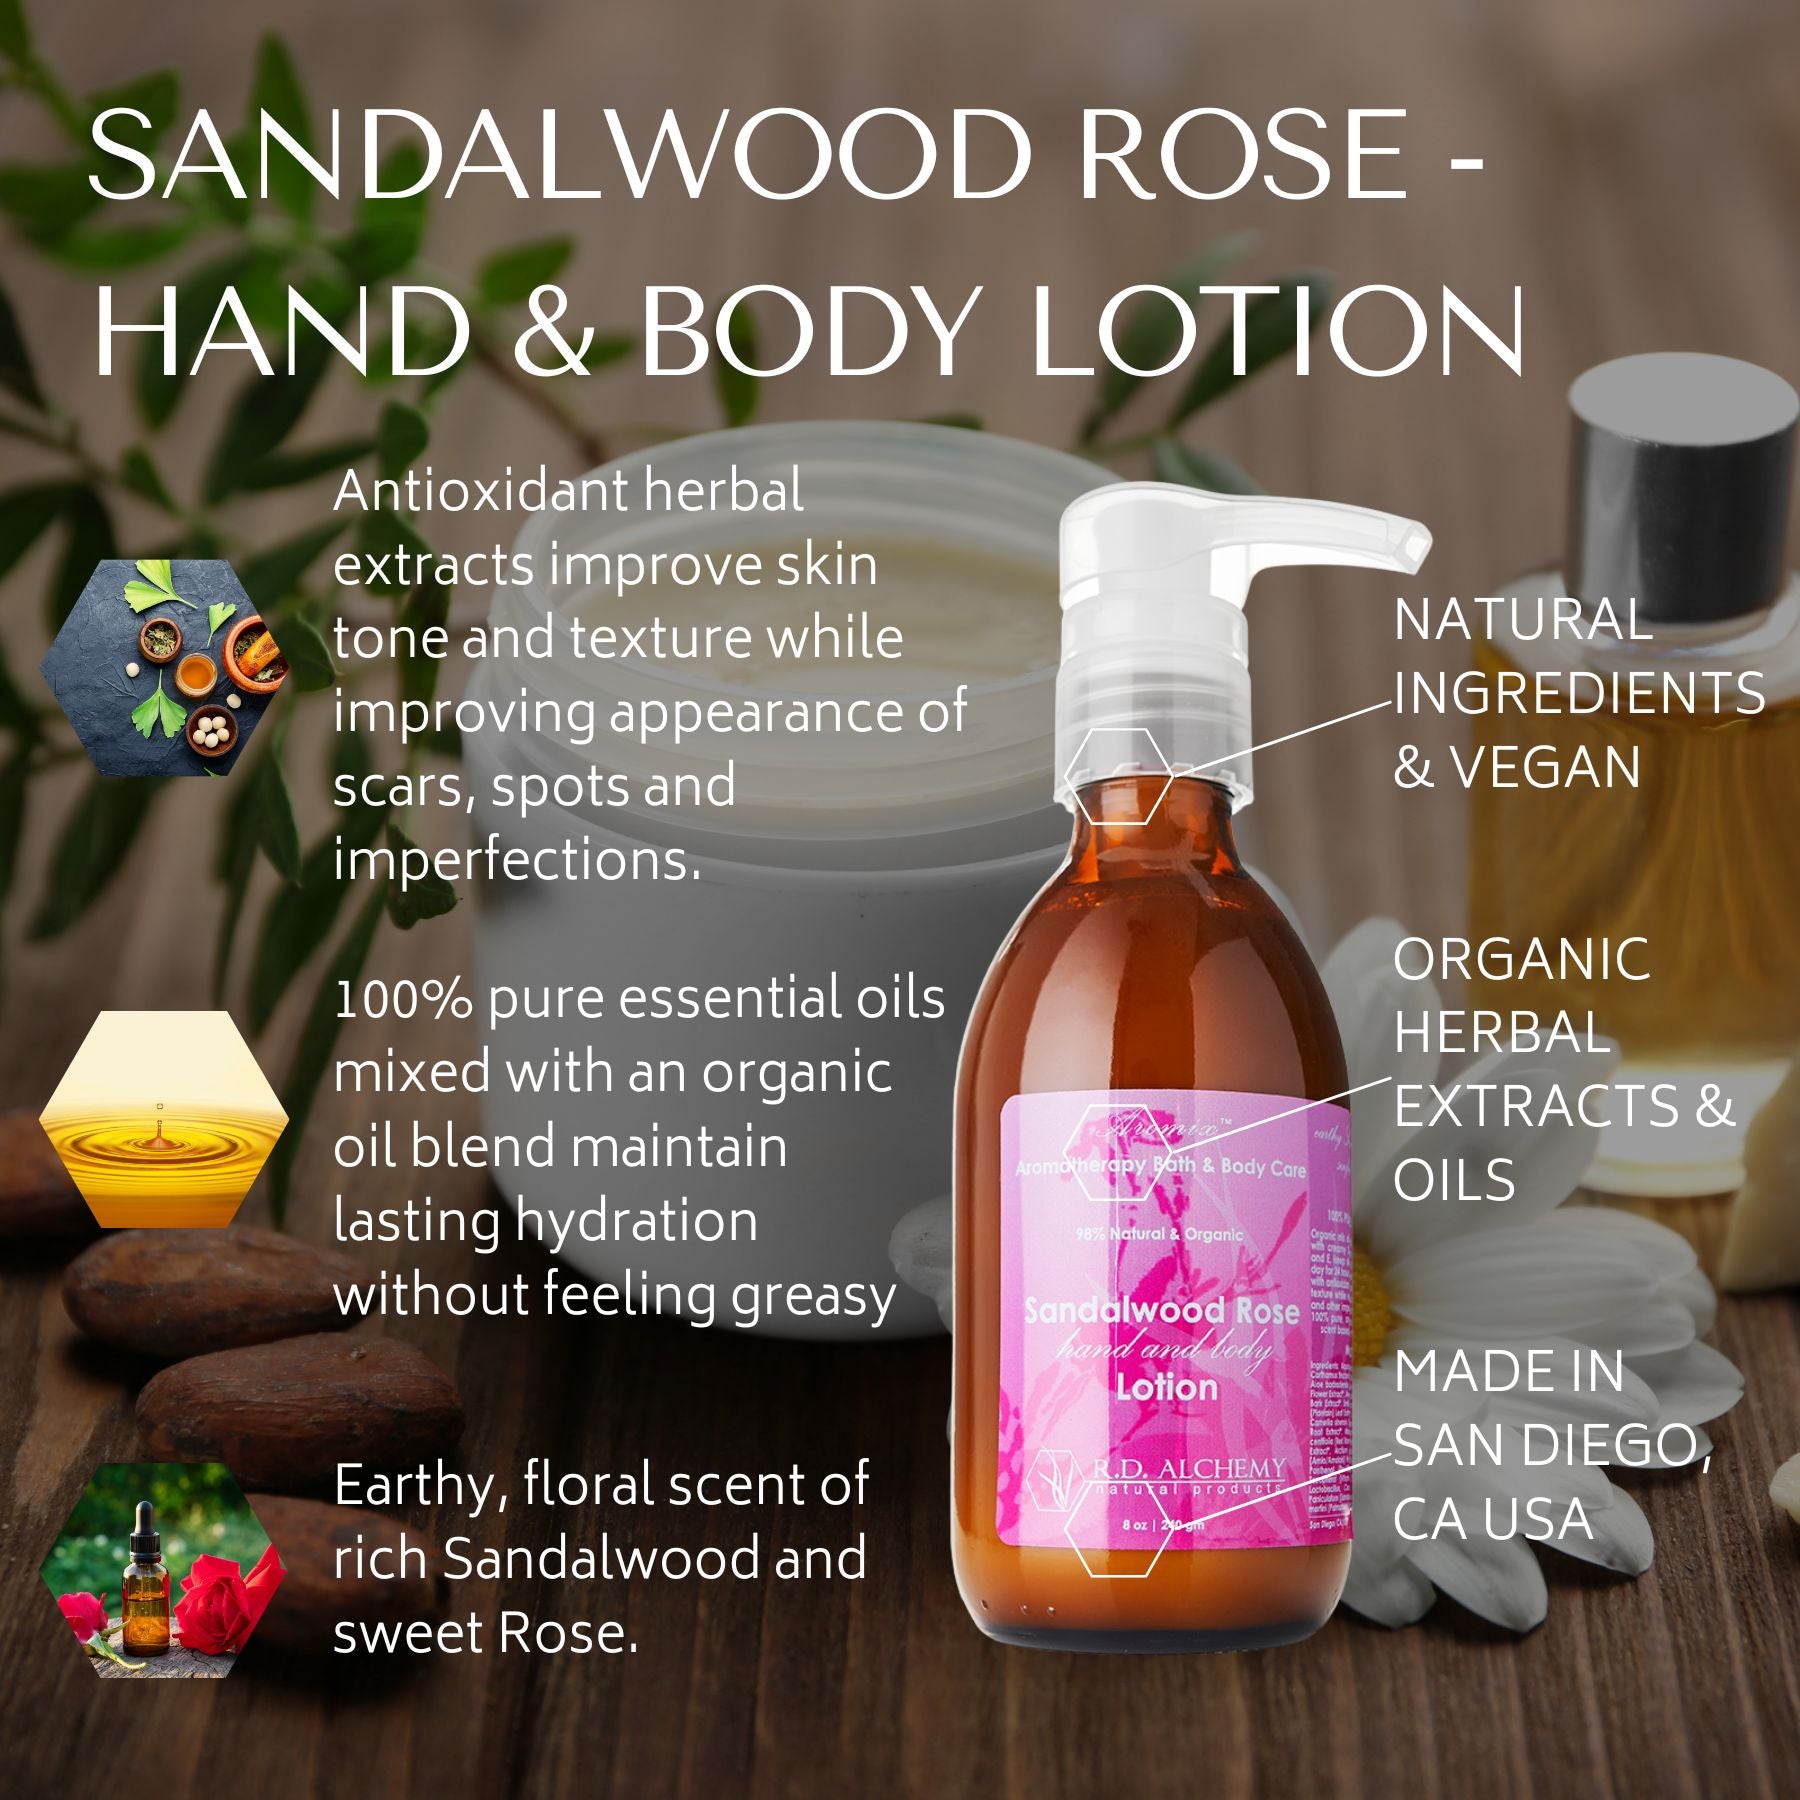 Sandalwood Rose - Hand & Body Lotion